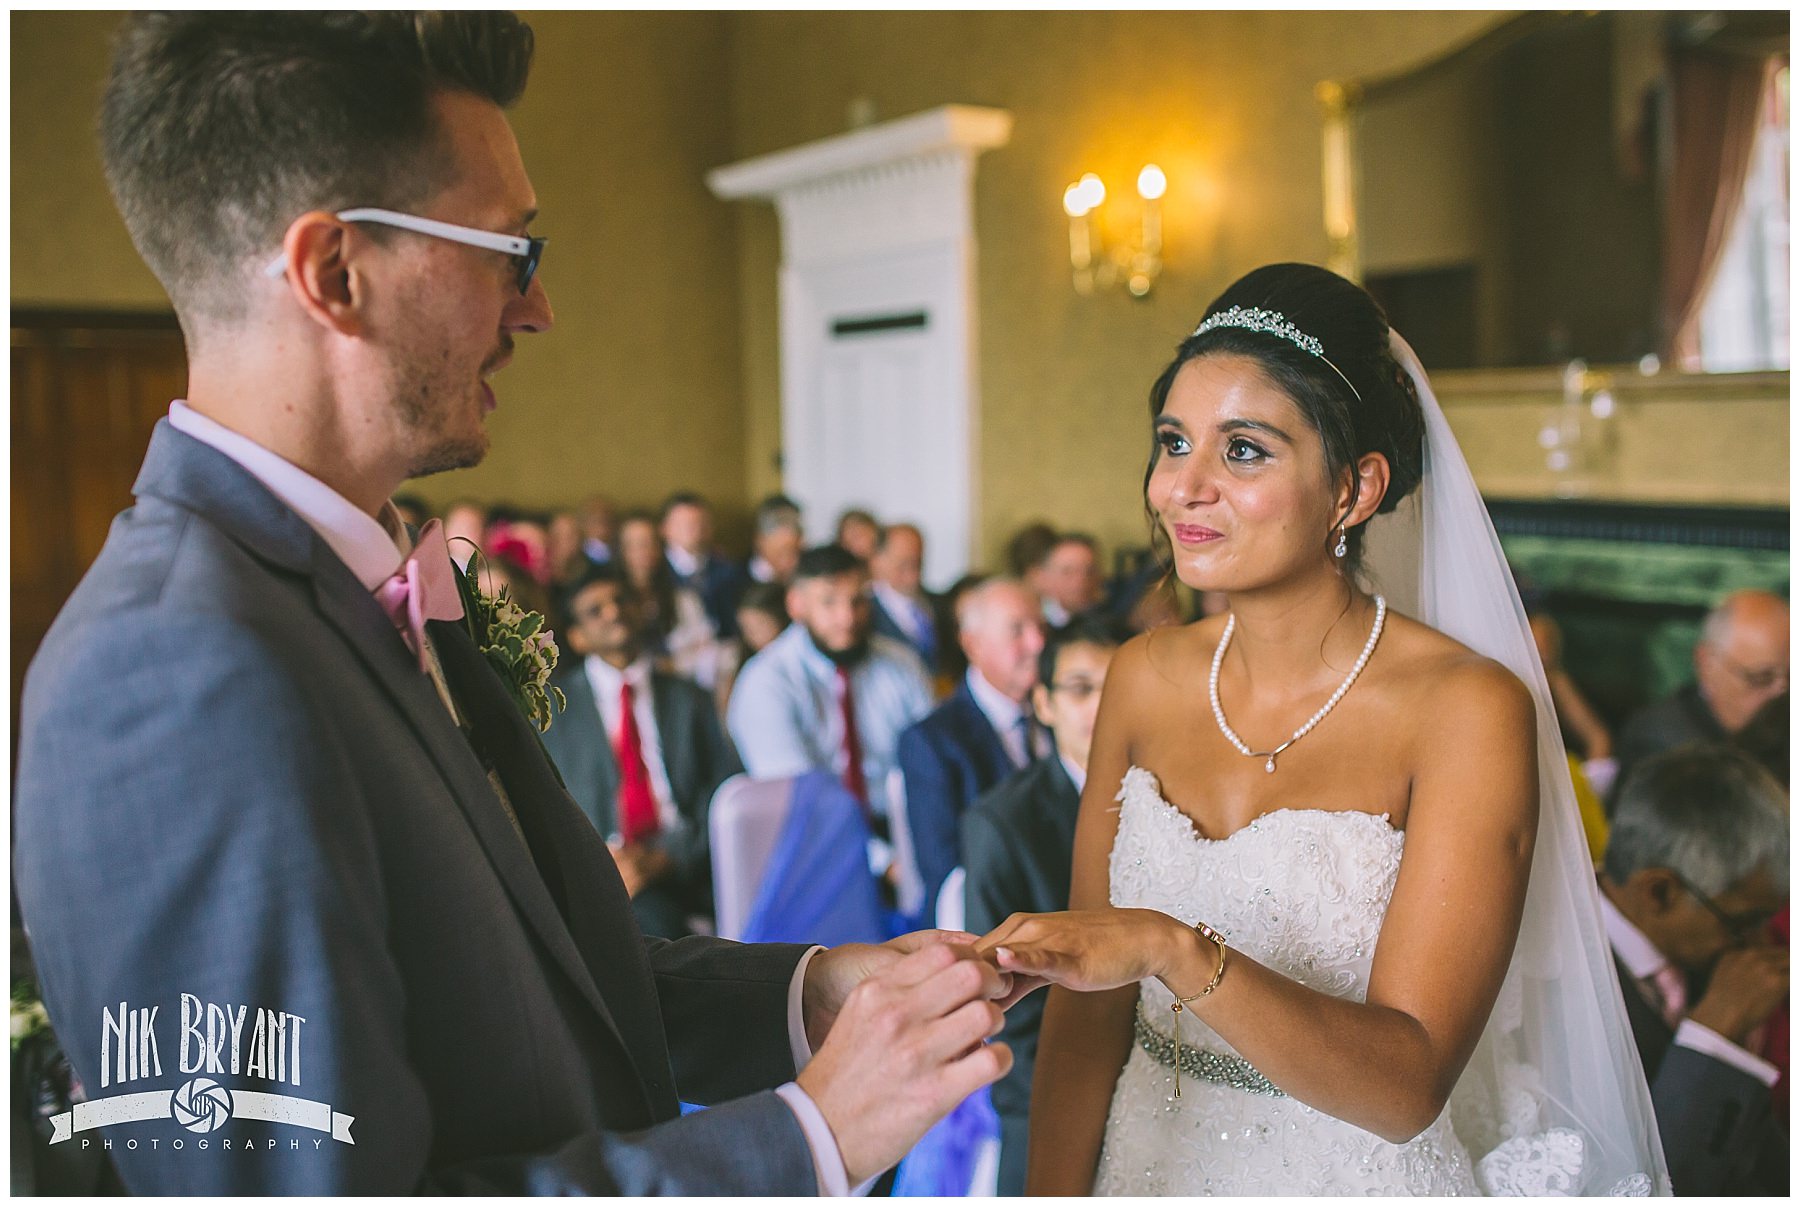 Ring exchange at shrigley hall wedding ceremony